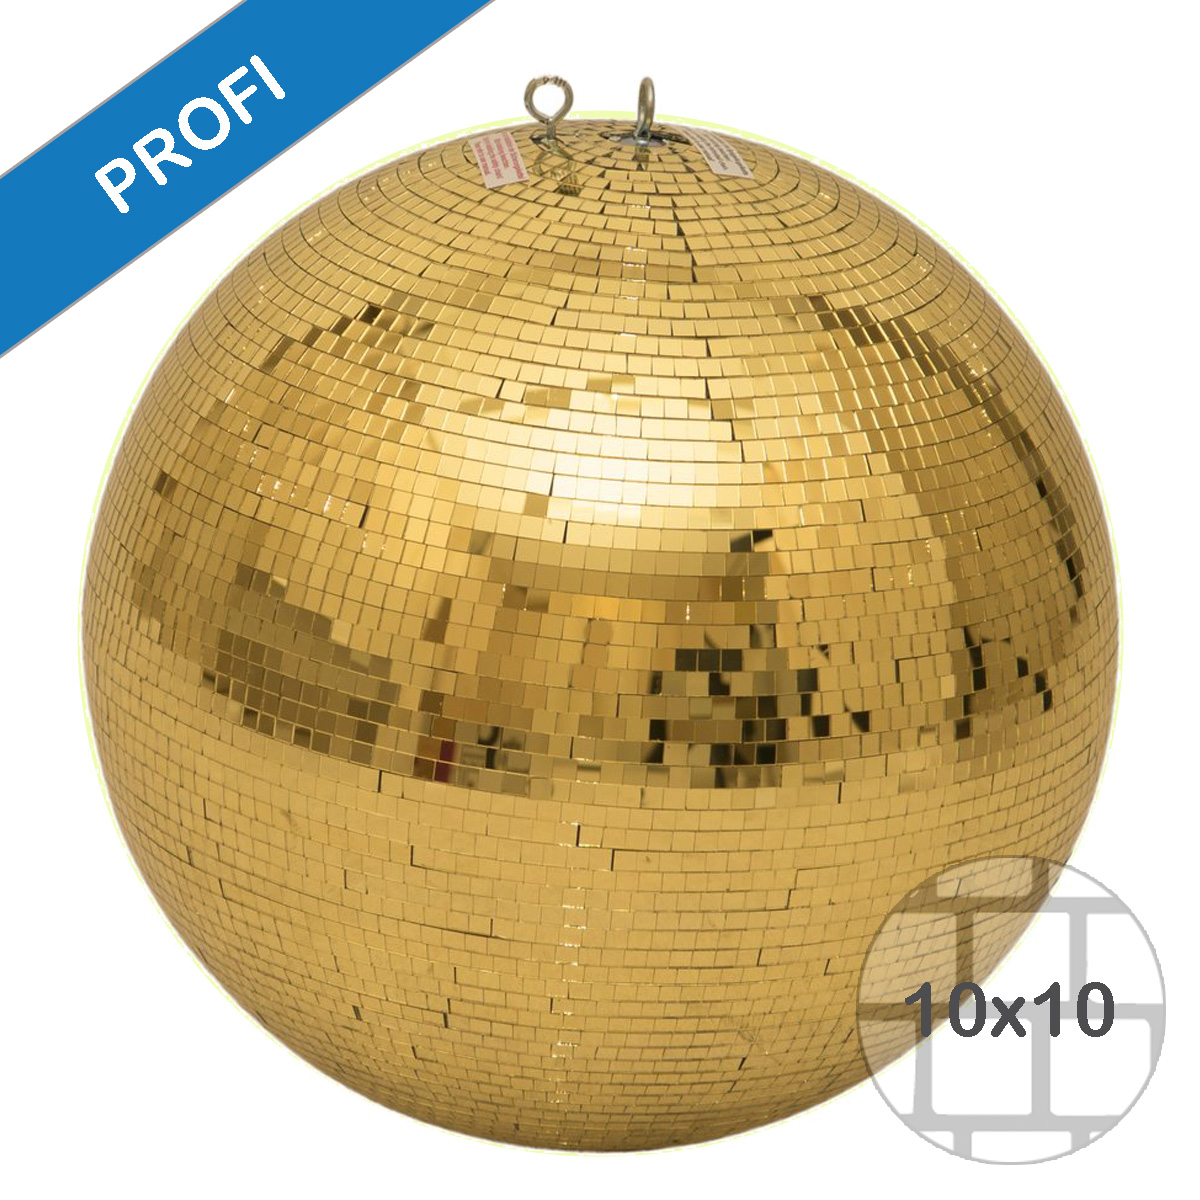 Spiegelkugel 150cm gold - Diskokugel (Discokugel) Party Lichteffekt - Echtglas - mirrorball safety gold color